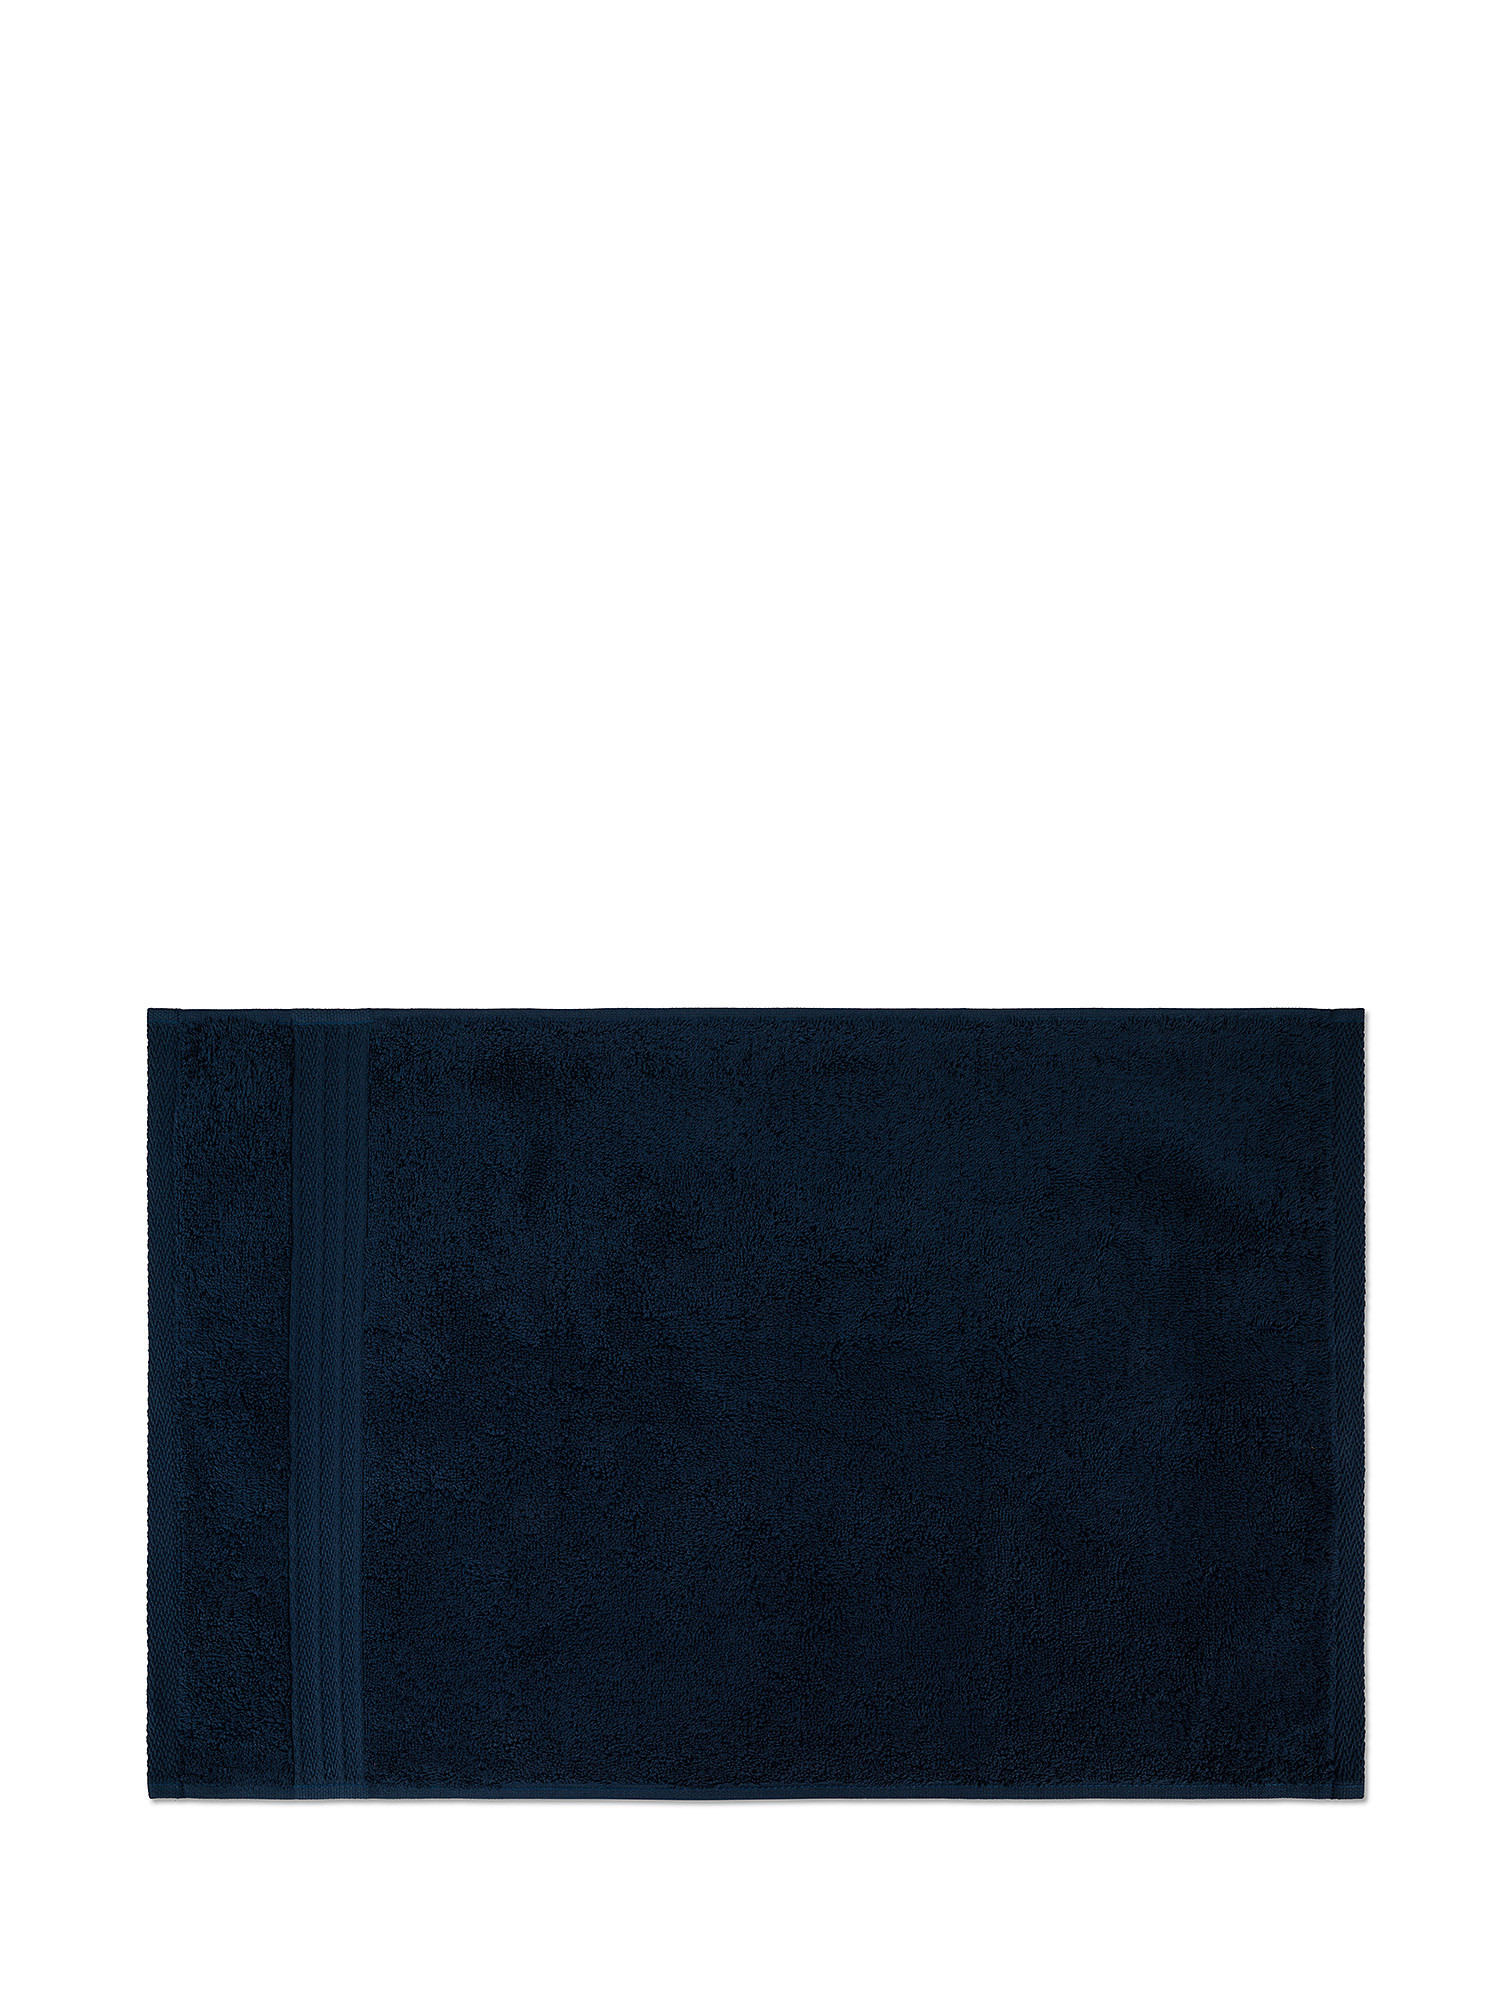 Zefiro solid color 100% cotton towel, Dark Blue, large image number 1